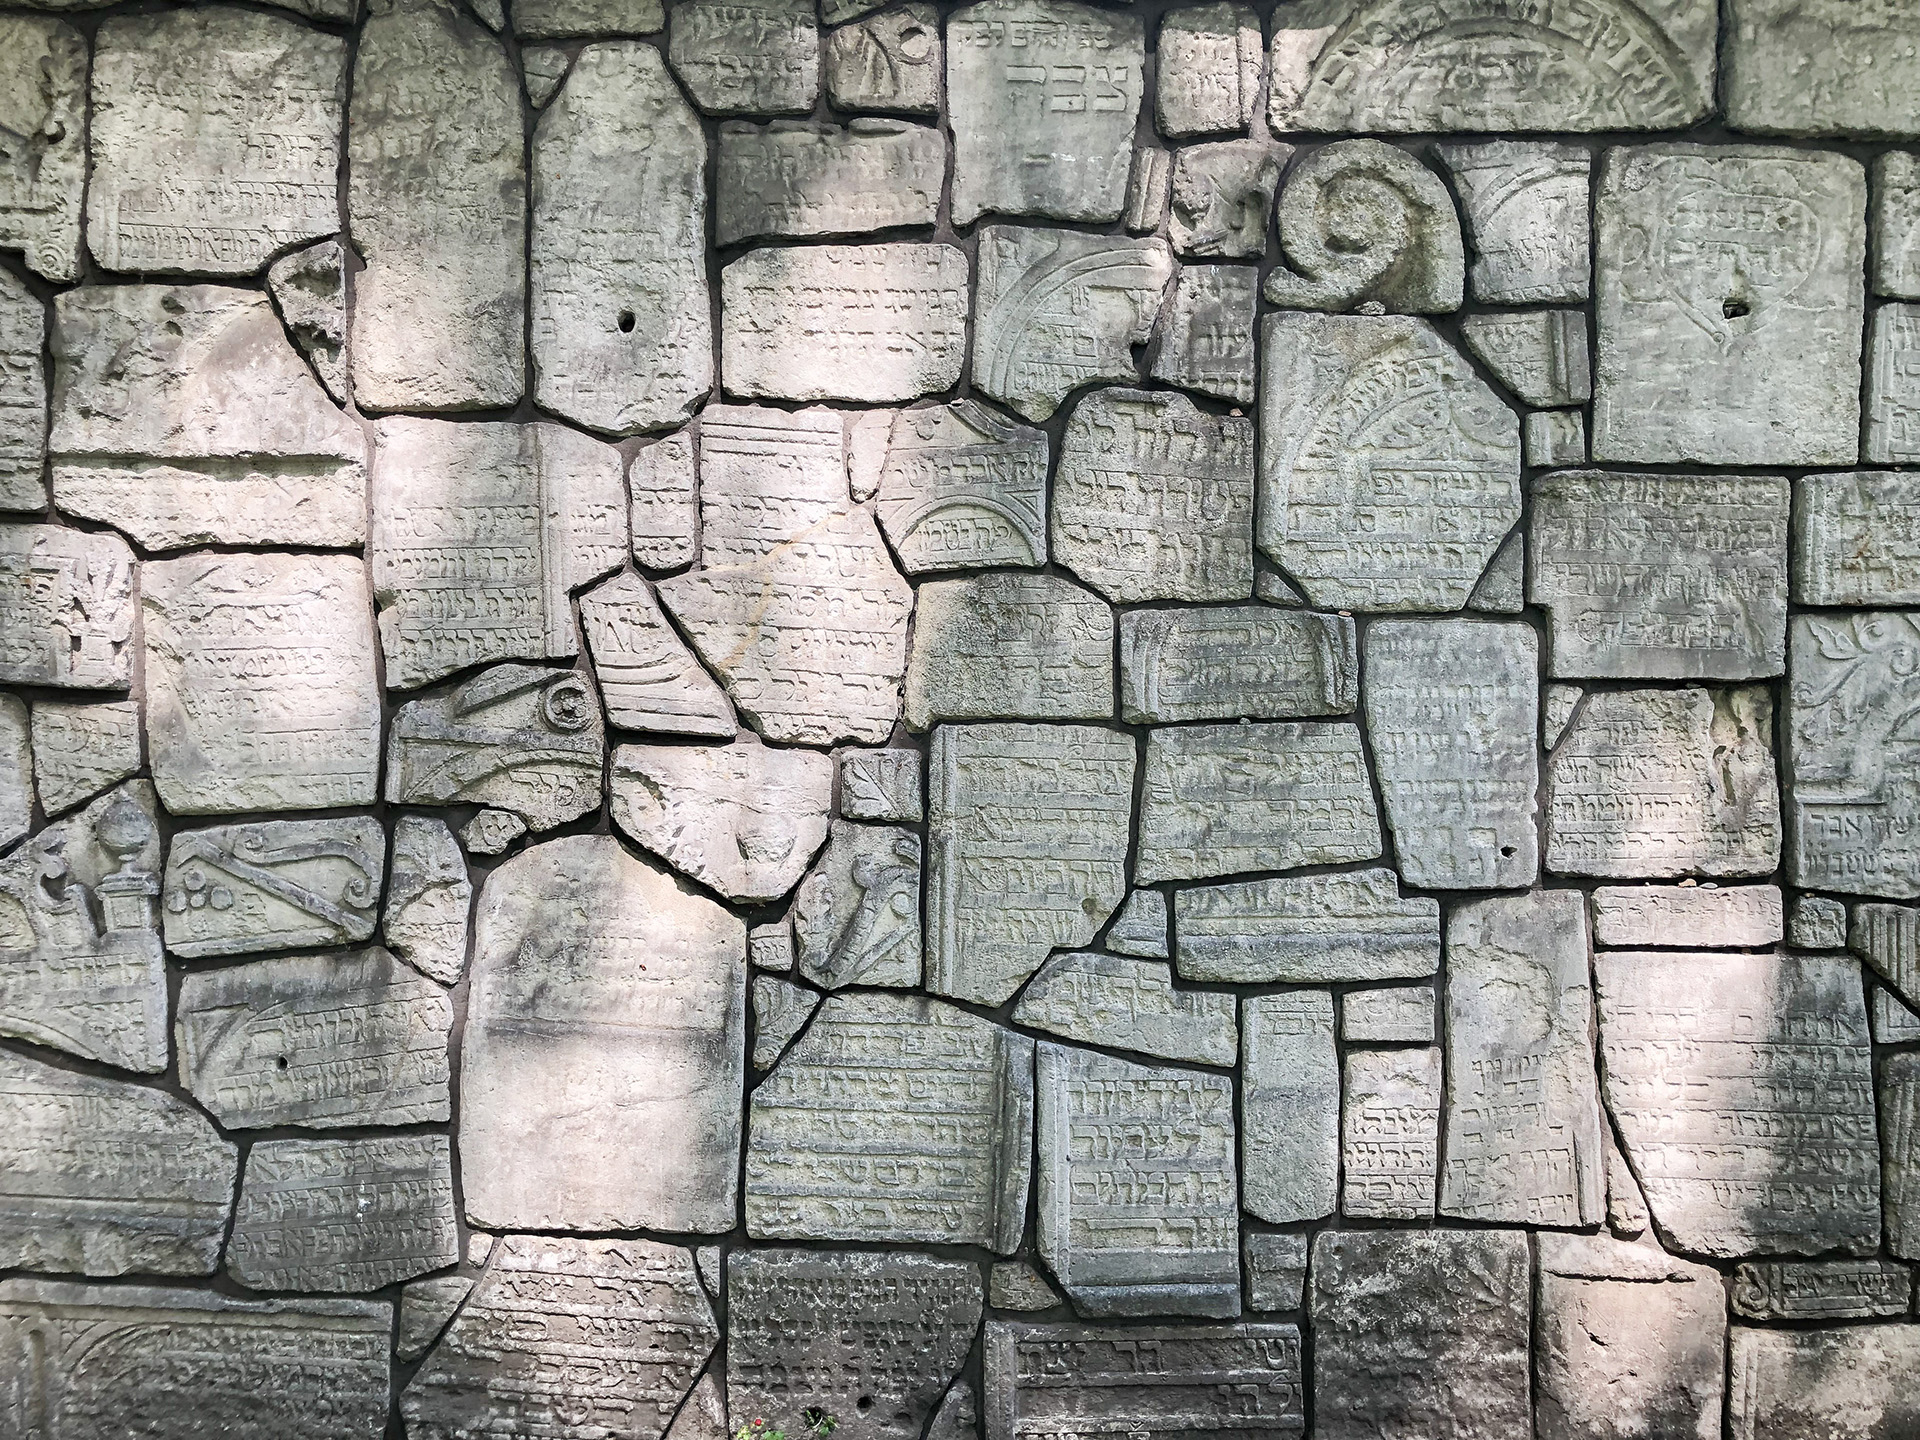 Brick wall with symbols imprinted in the bricks